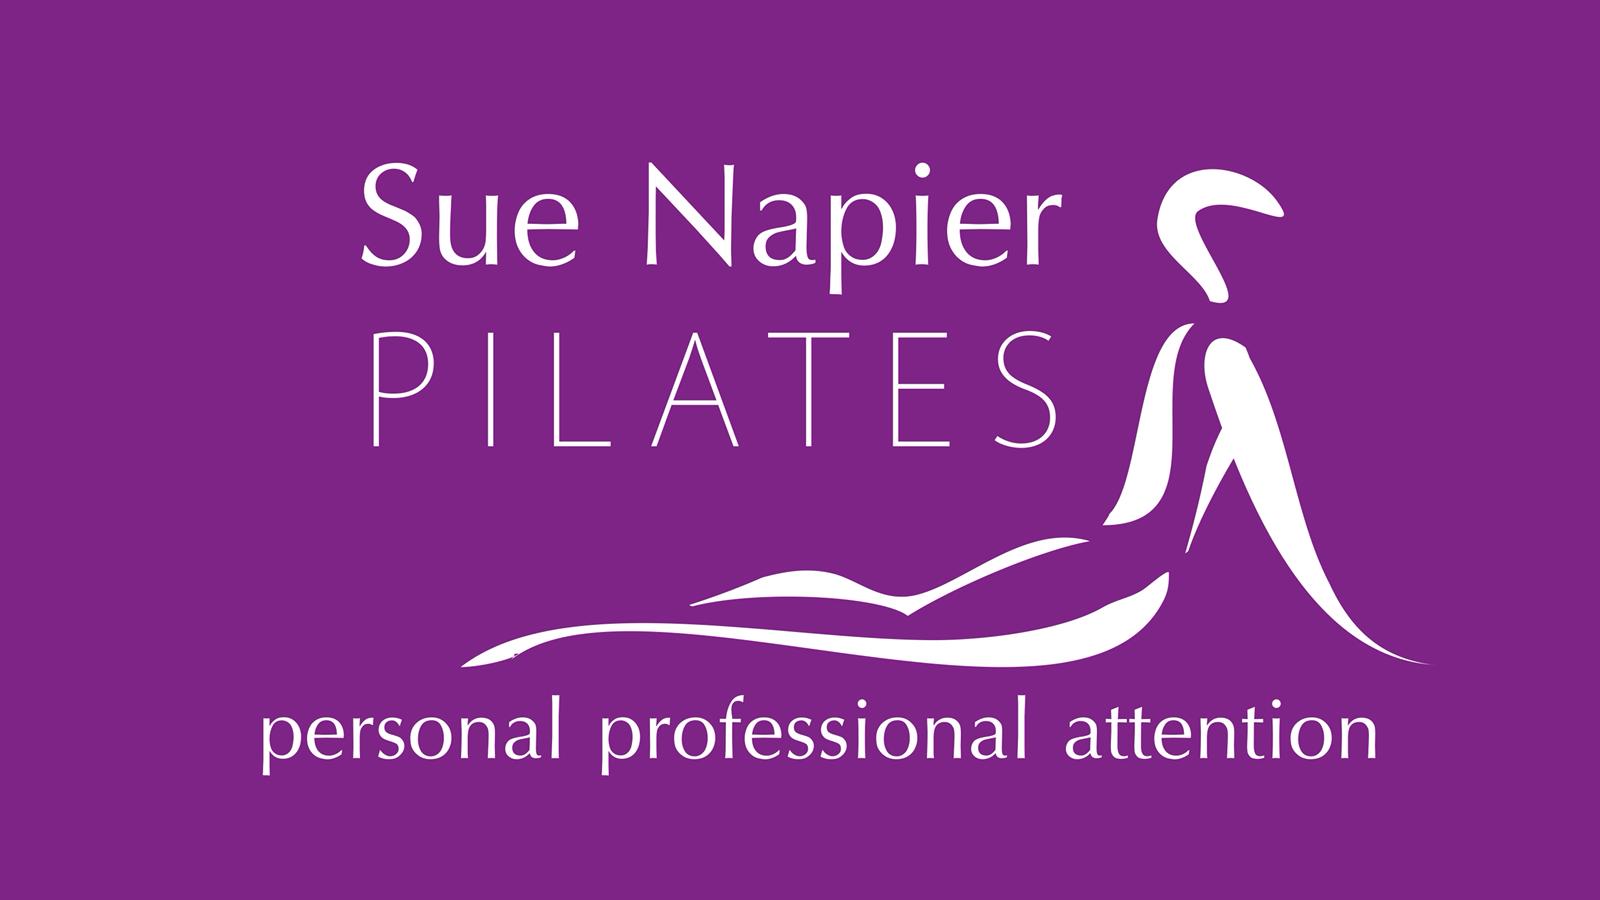 Sue Napier Pilates: Personal Professional Attention